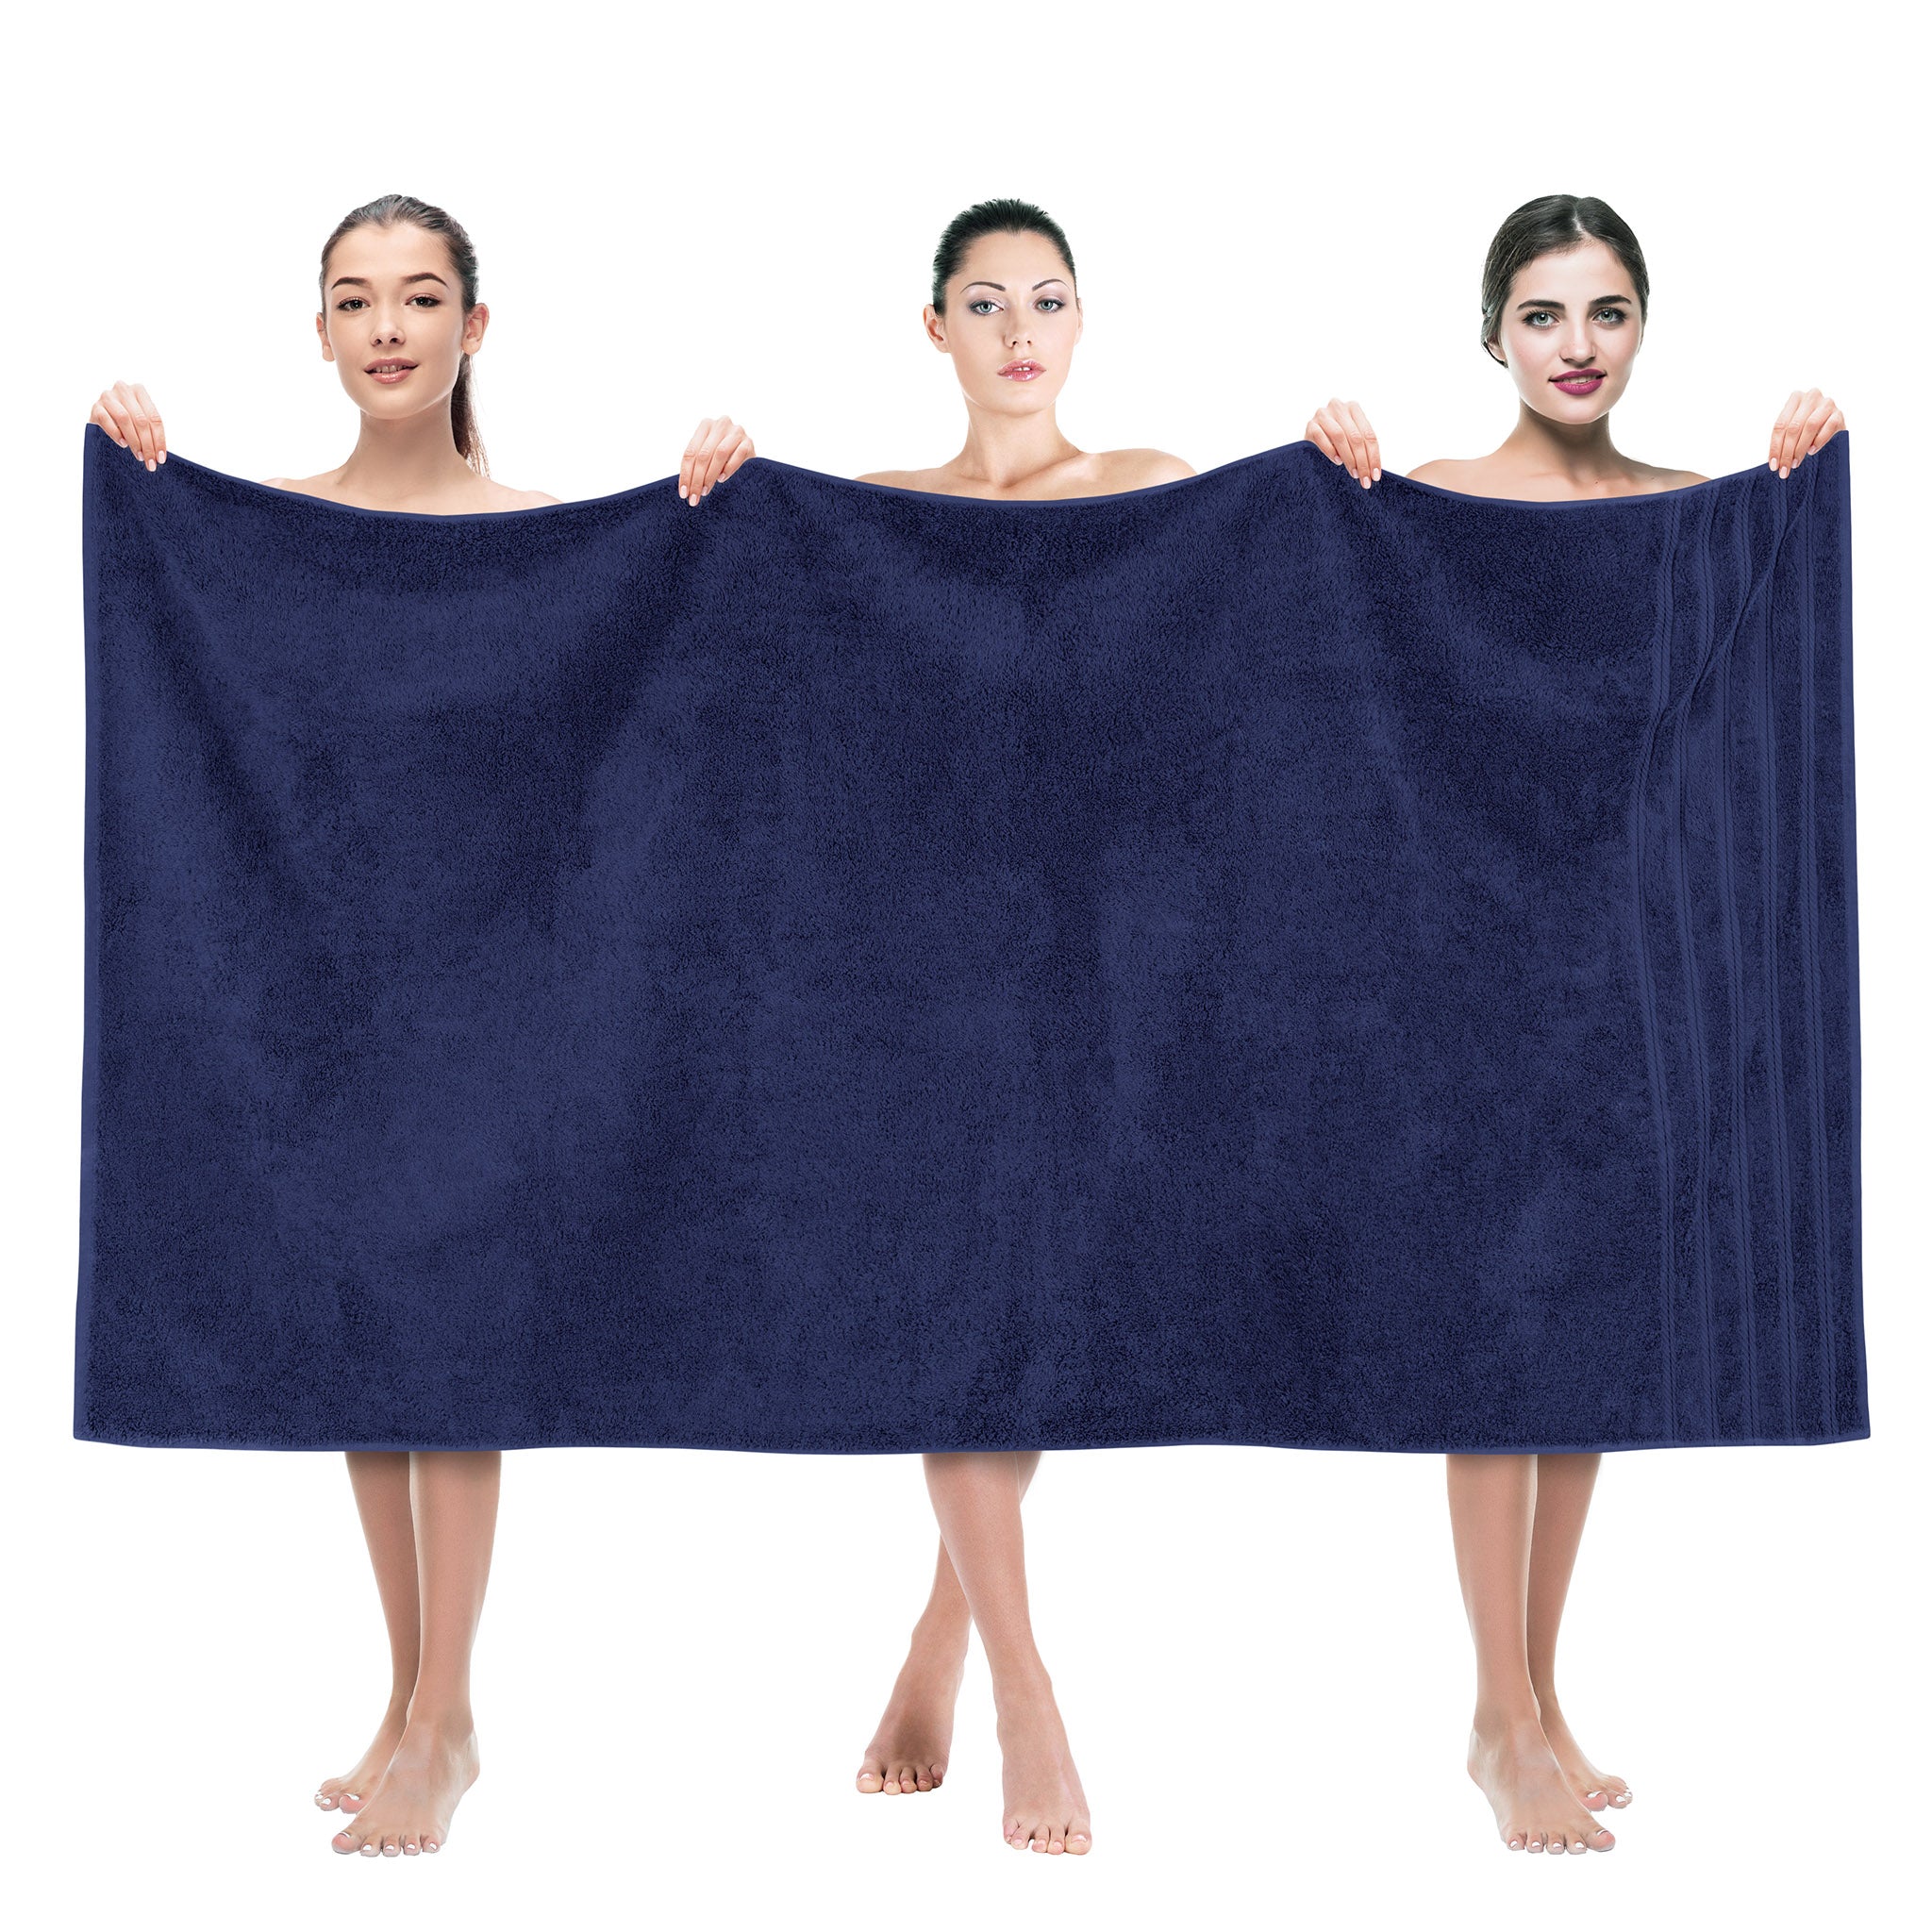 American Soft Linen Bath Sheet 35x70 inch 100% Turkish Cotton Bath Towel Sheets - Navy Blue, Size: Jumbo Bath Sheet 35x70